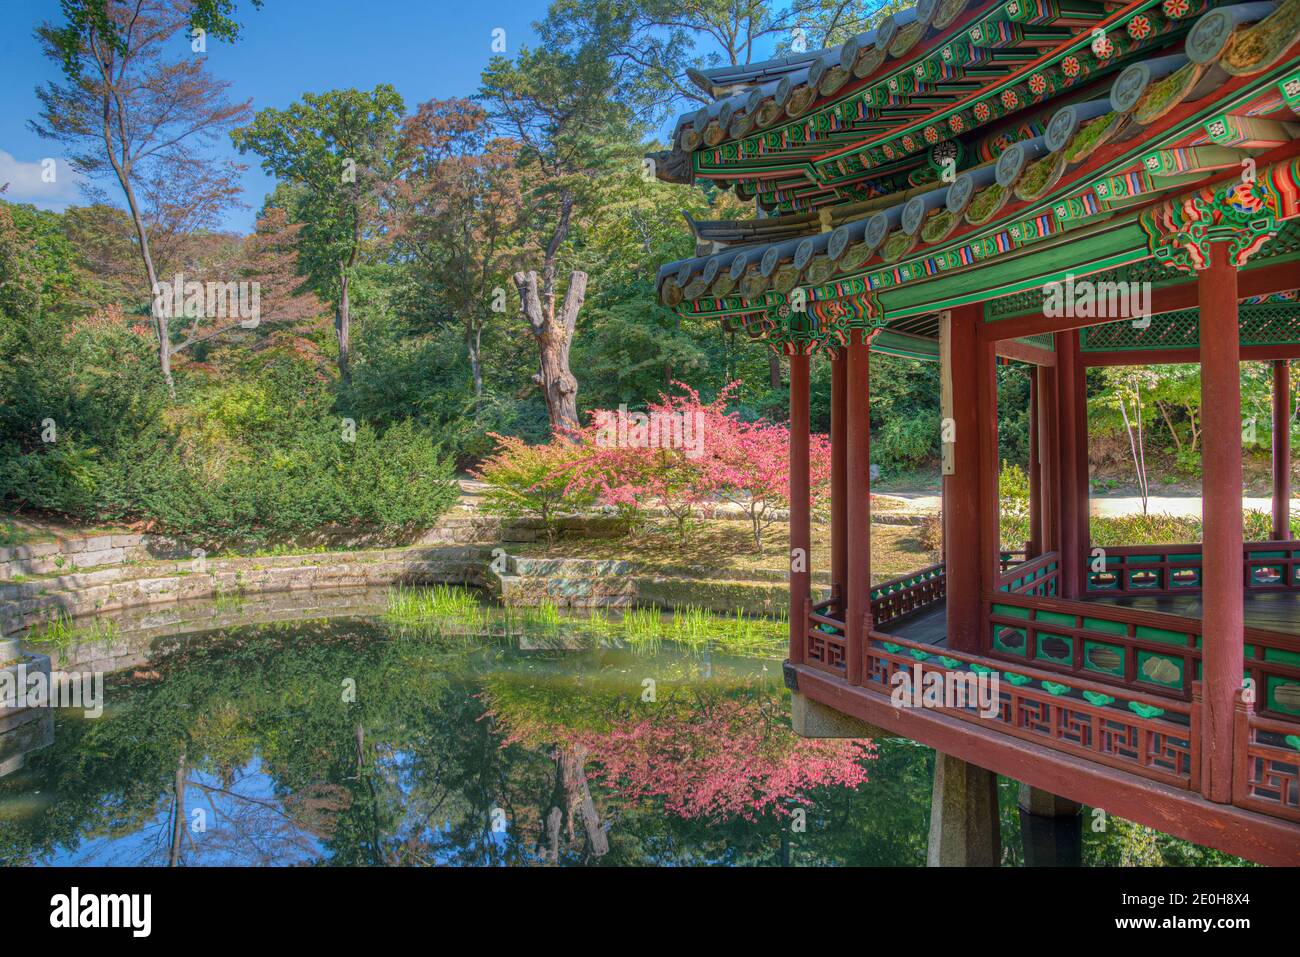 Wooden pavilion at Aeryeonji pond inside secret garden of Changdeokgung palace in Seoul, Republic of Korea Stock Photo